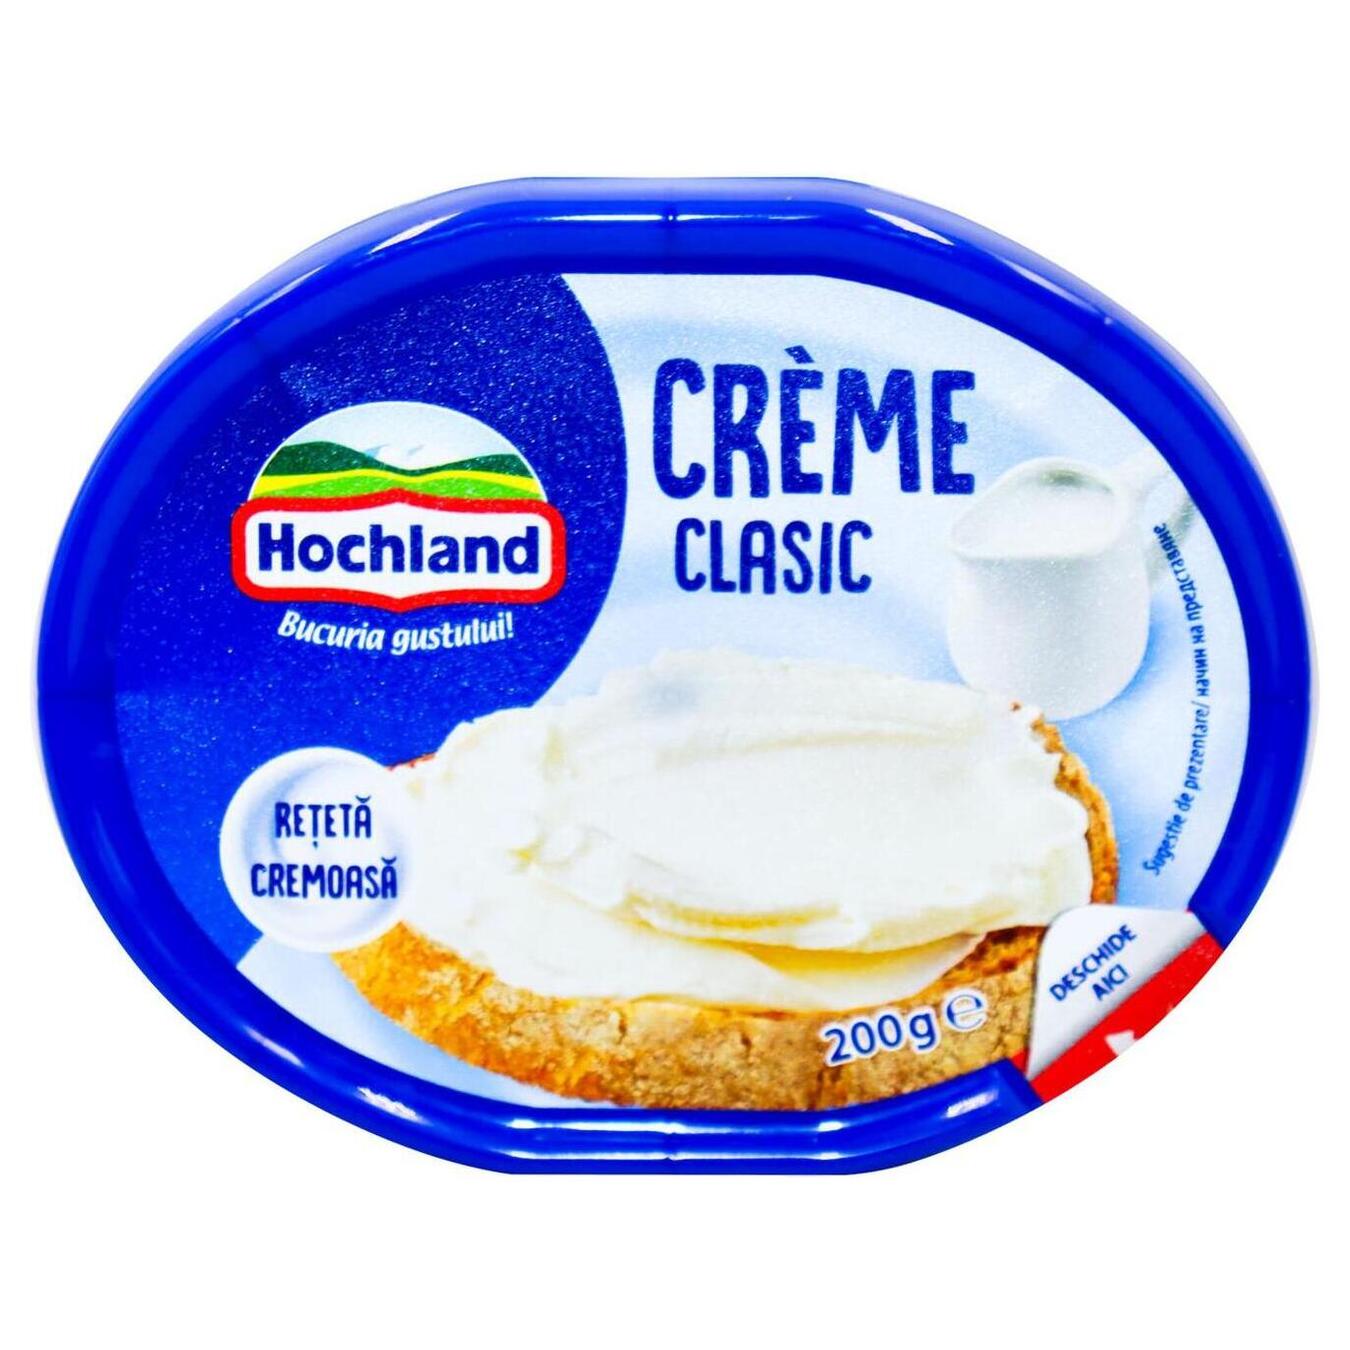 Cream cheese Hochland cream tub 200g